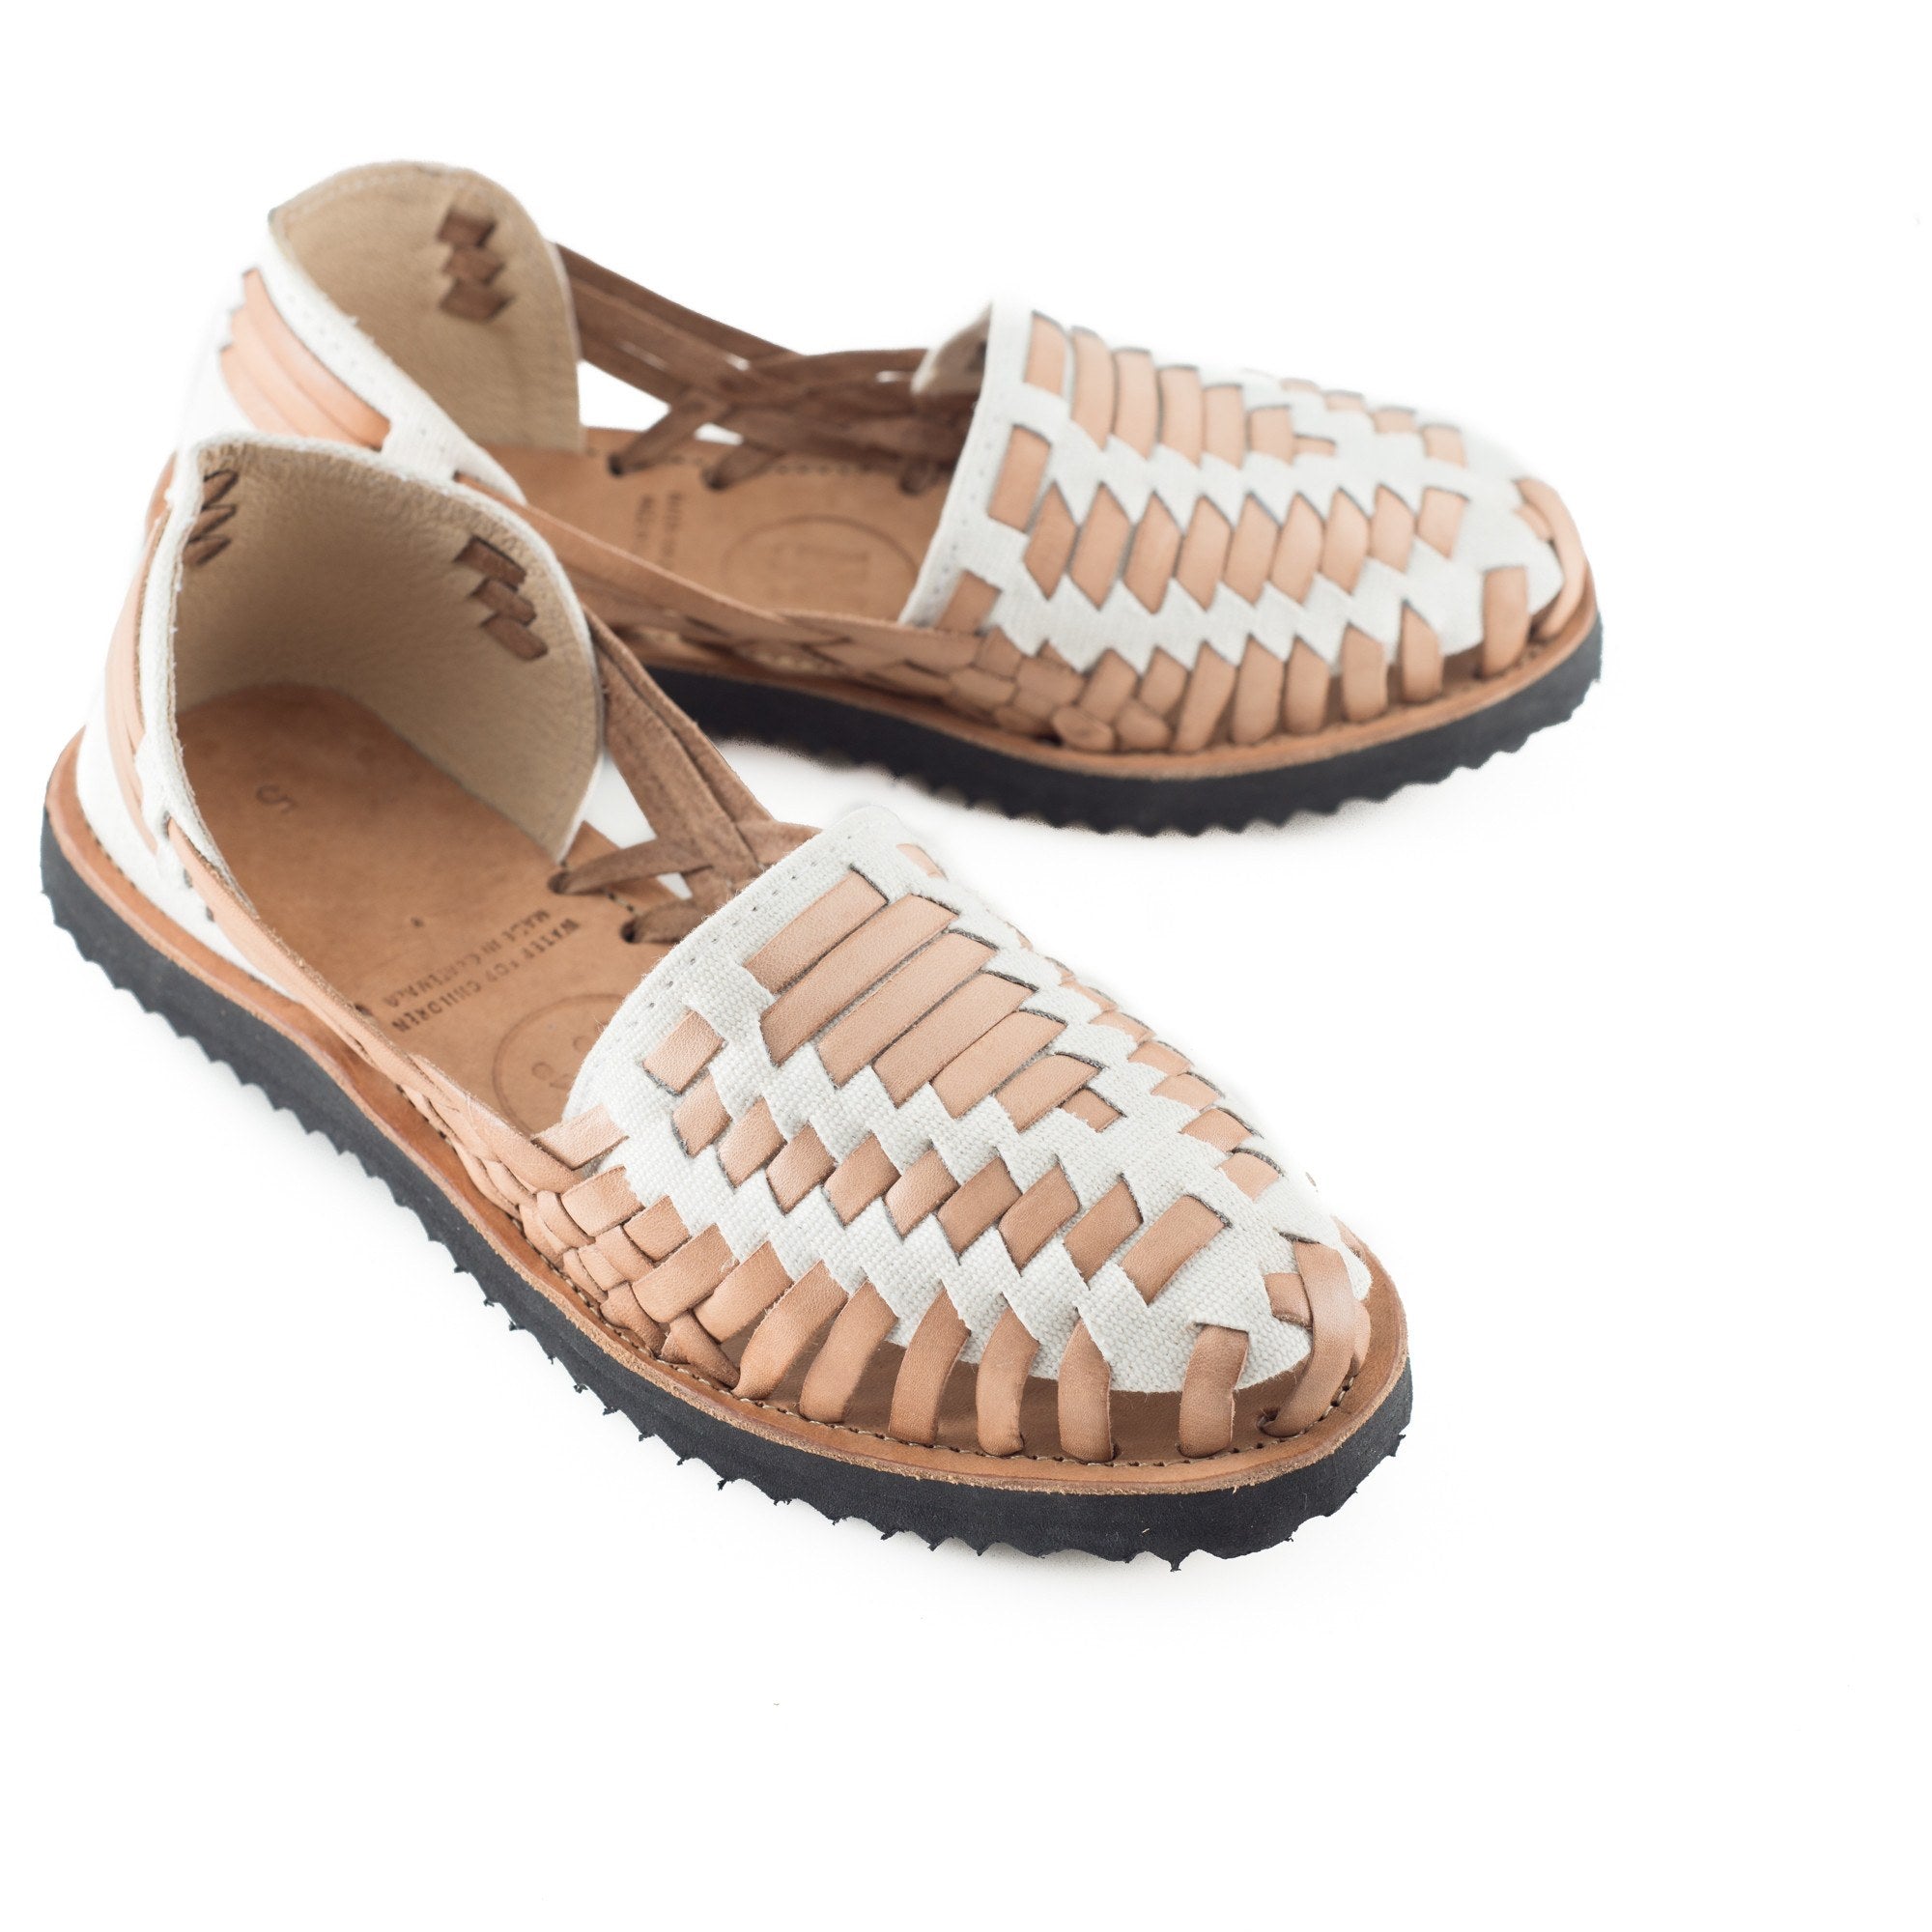 huarache style sandals